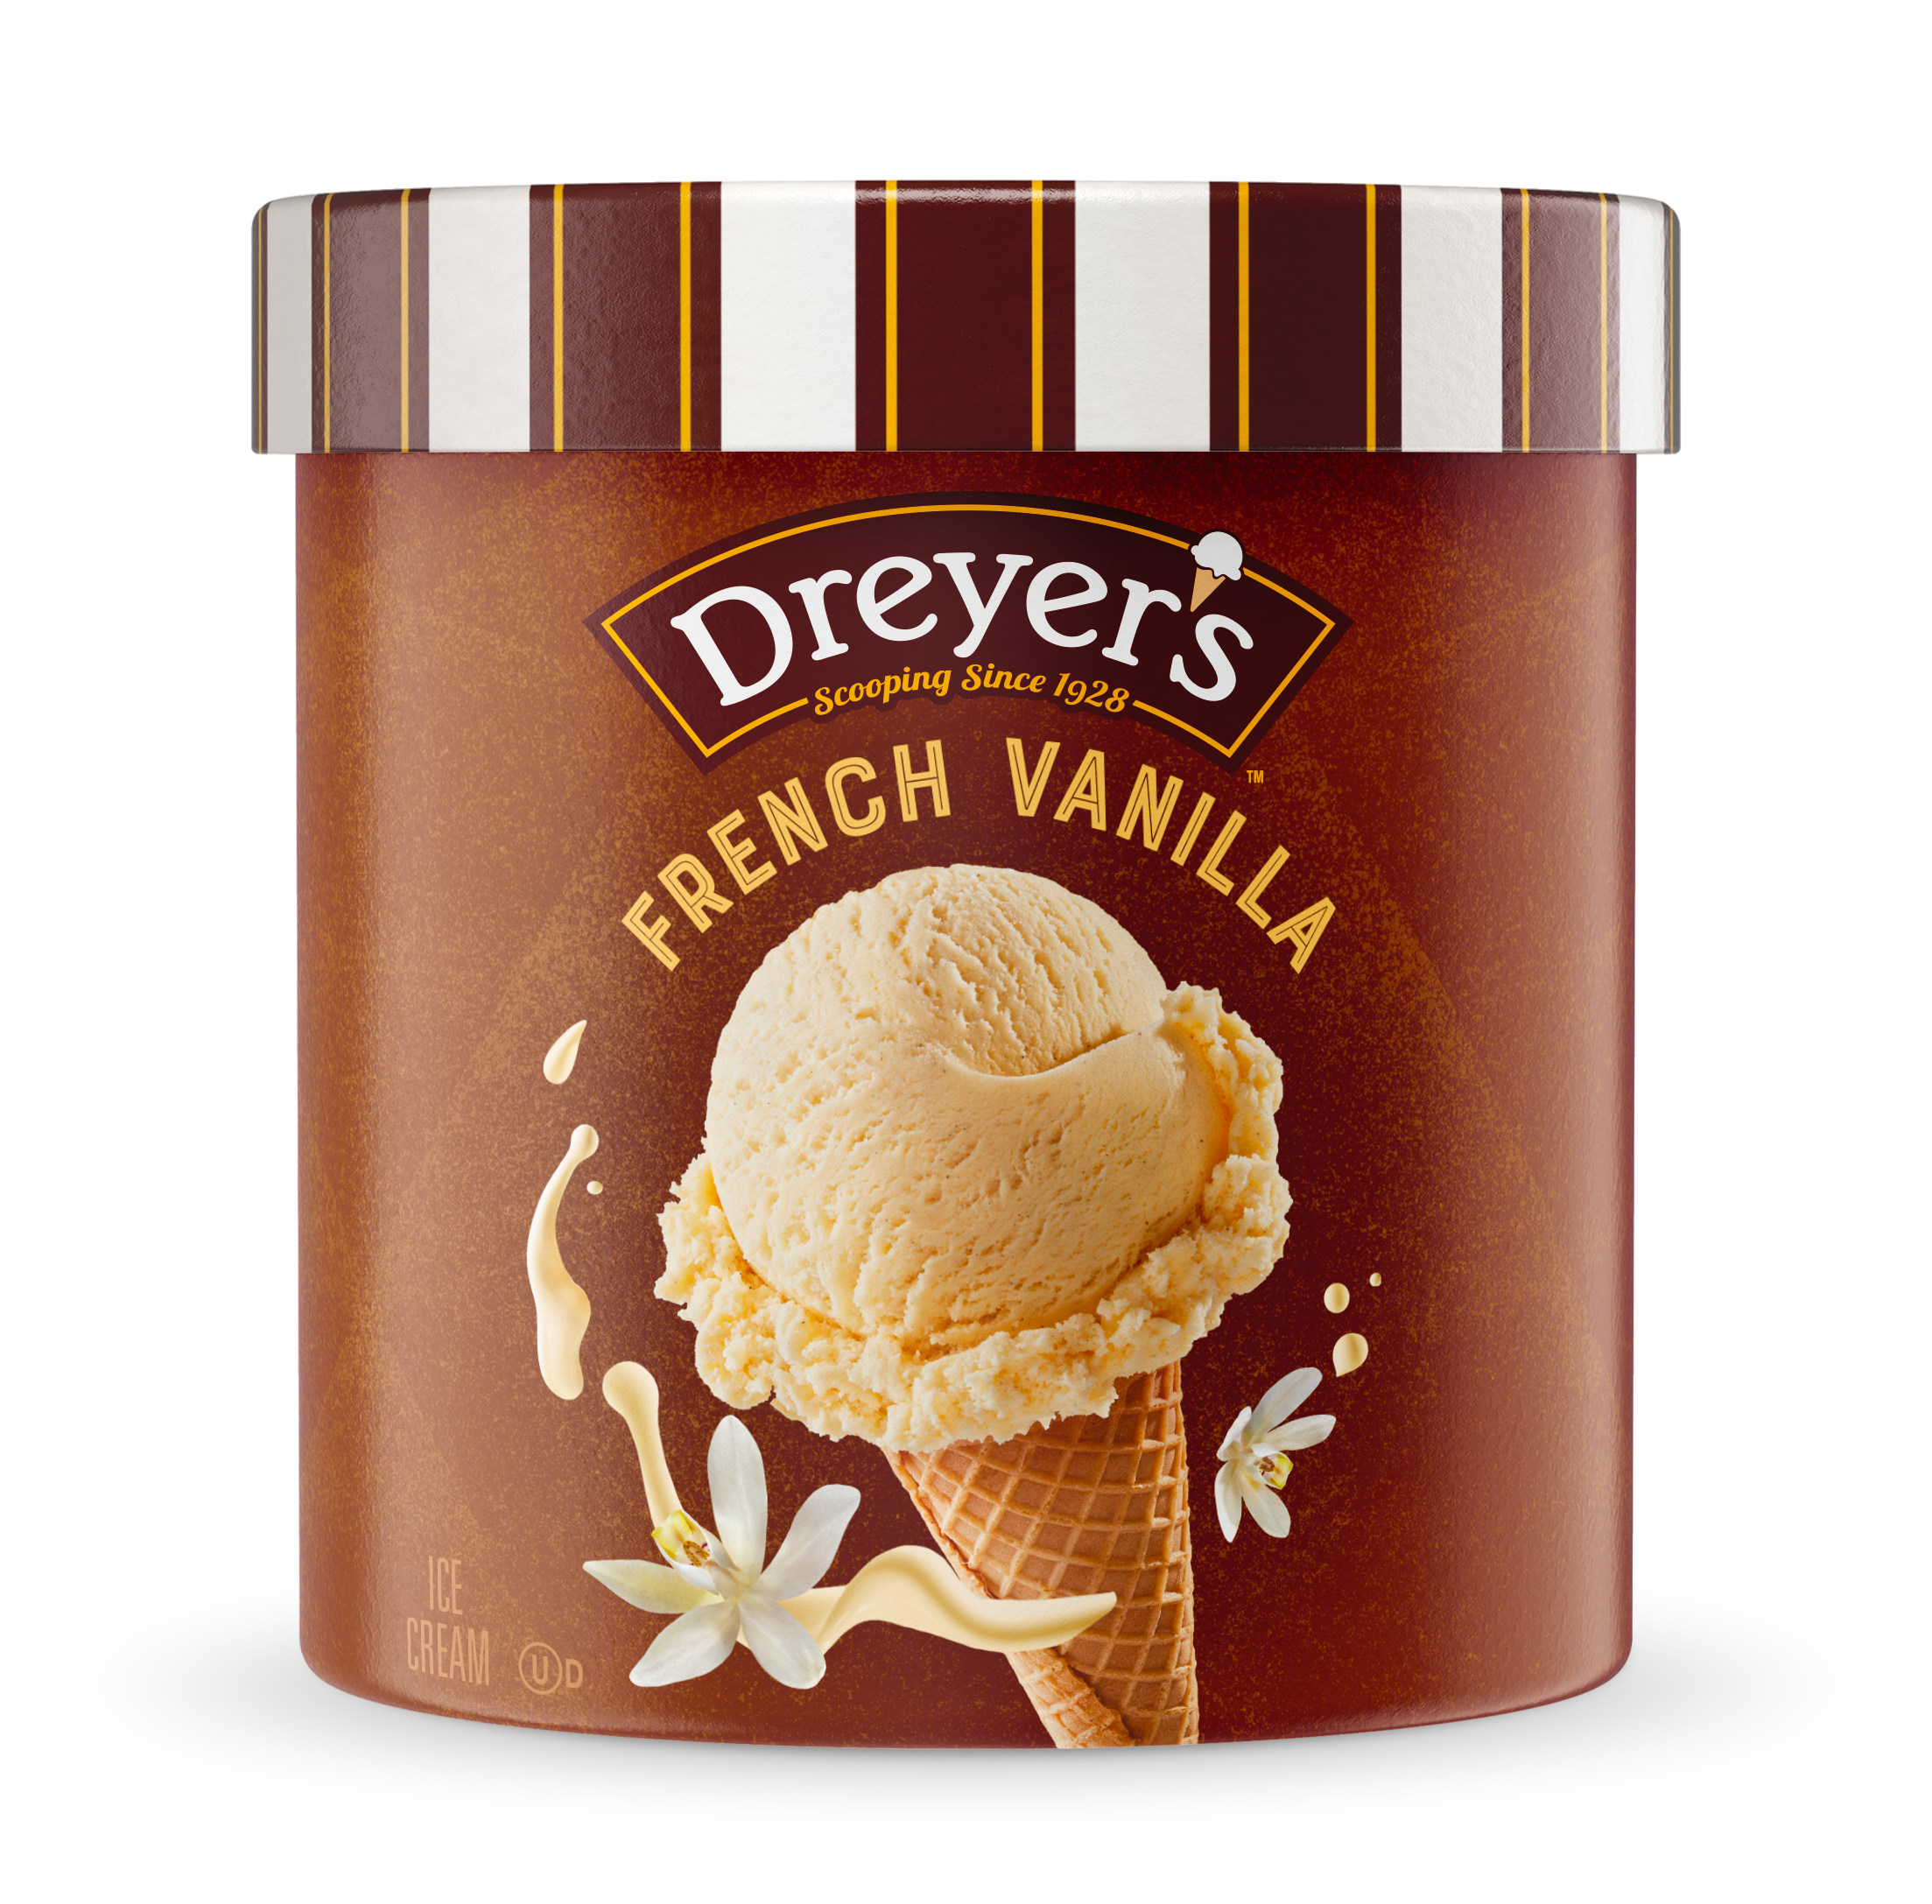 Carton of Dreyer's French vanilla ice cream